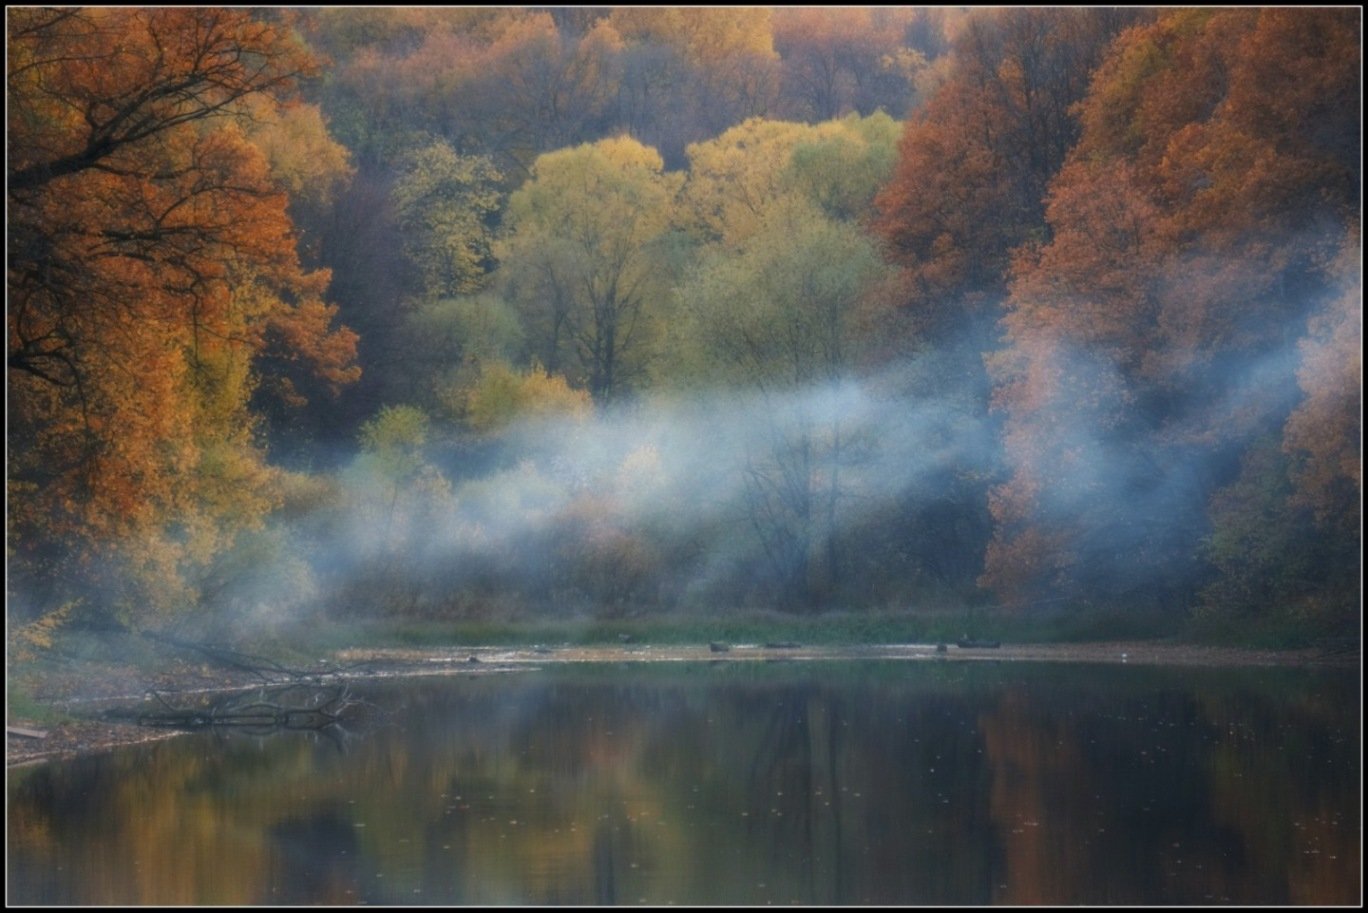 Легкий туман дымка. Пейзаж с дымкой. Дымка над водой. Осенняя дымка. Туман дымка.